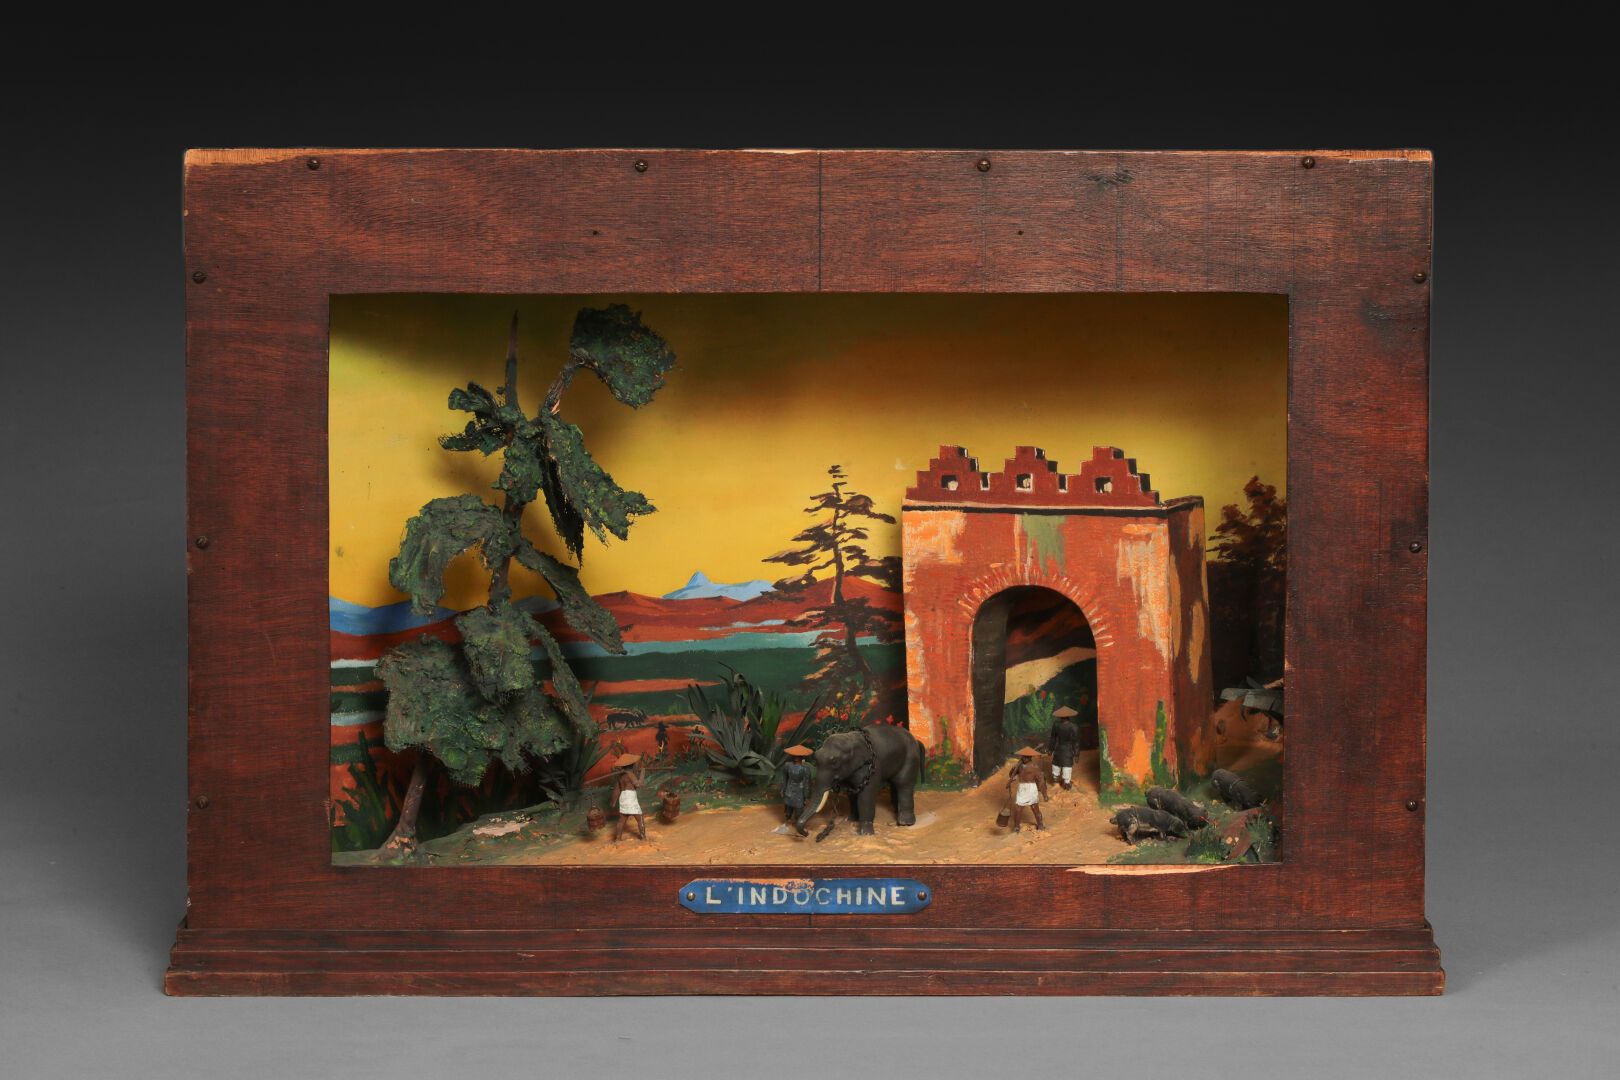 Null 1931

Diorama C-B-G Mignot - 殖民时期的展览。印度支那馆。巴黎。

Diorama展示了一个由农民、大象和城市郊区的树木组&hellip;